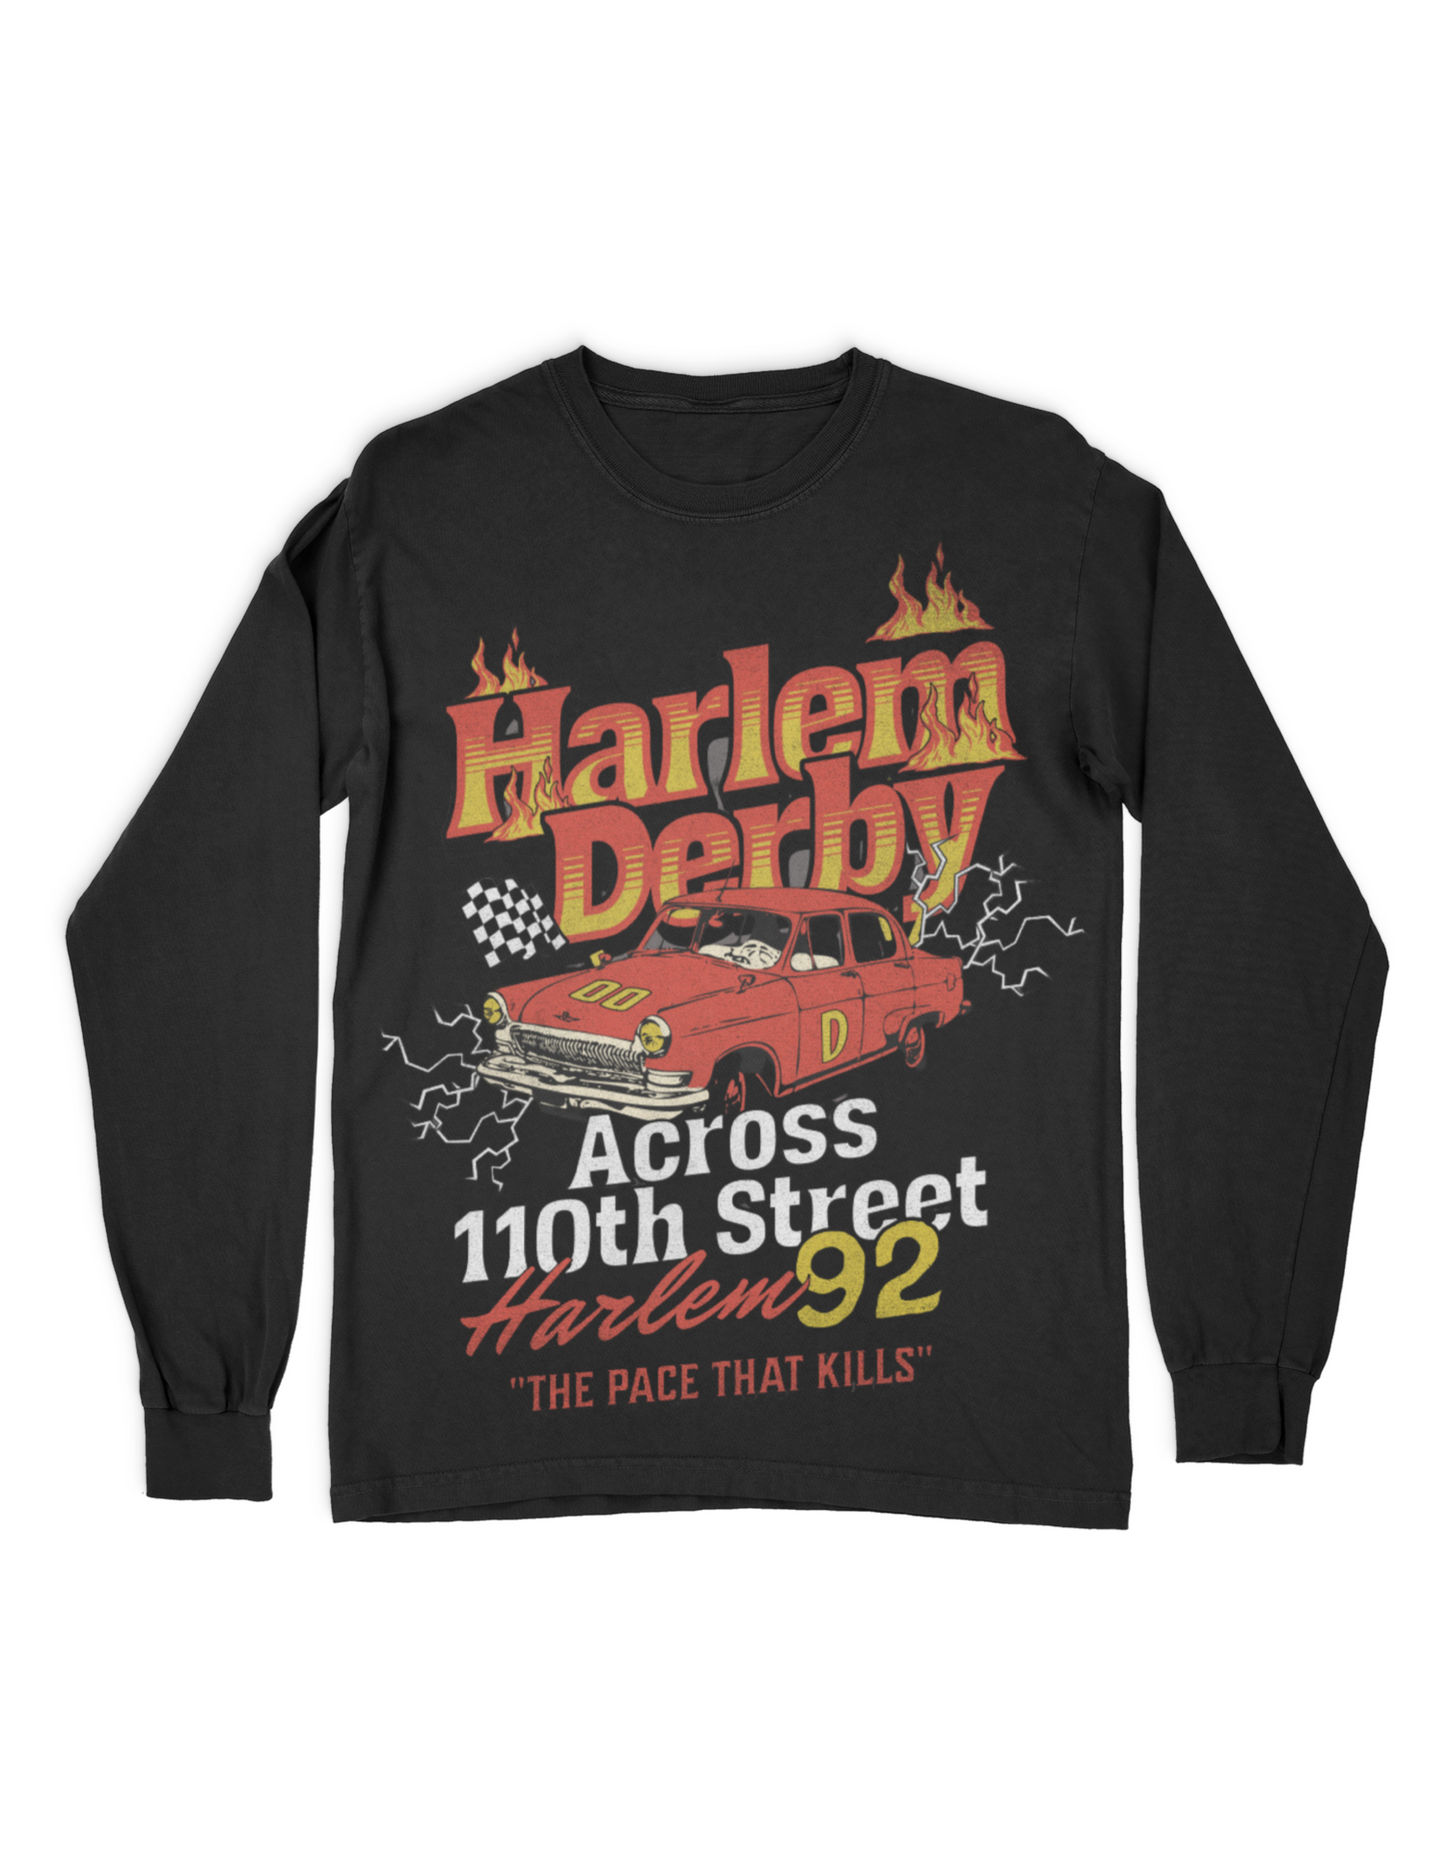 Across 110th Street: Harlem Derby (Black)